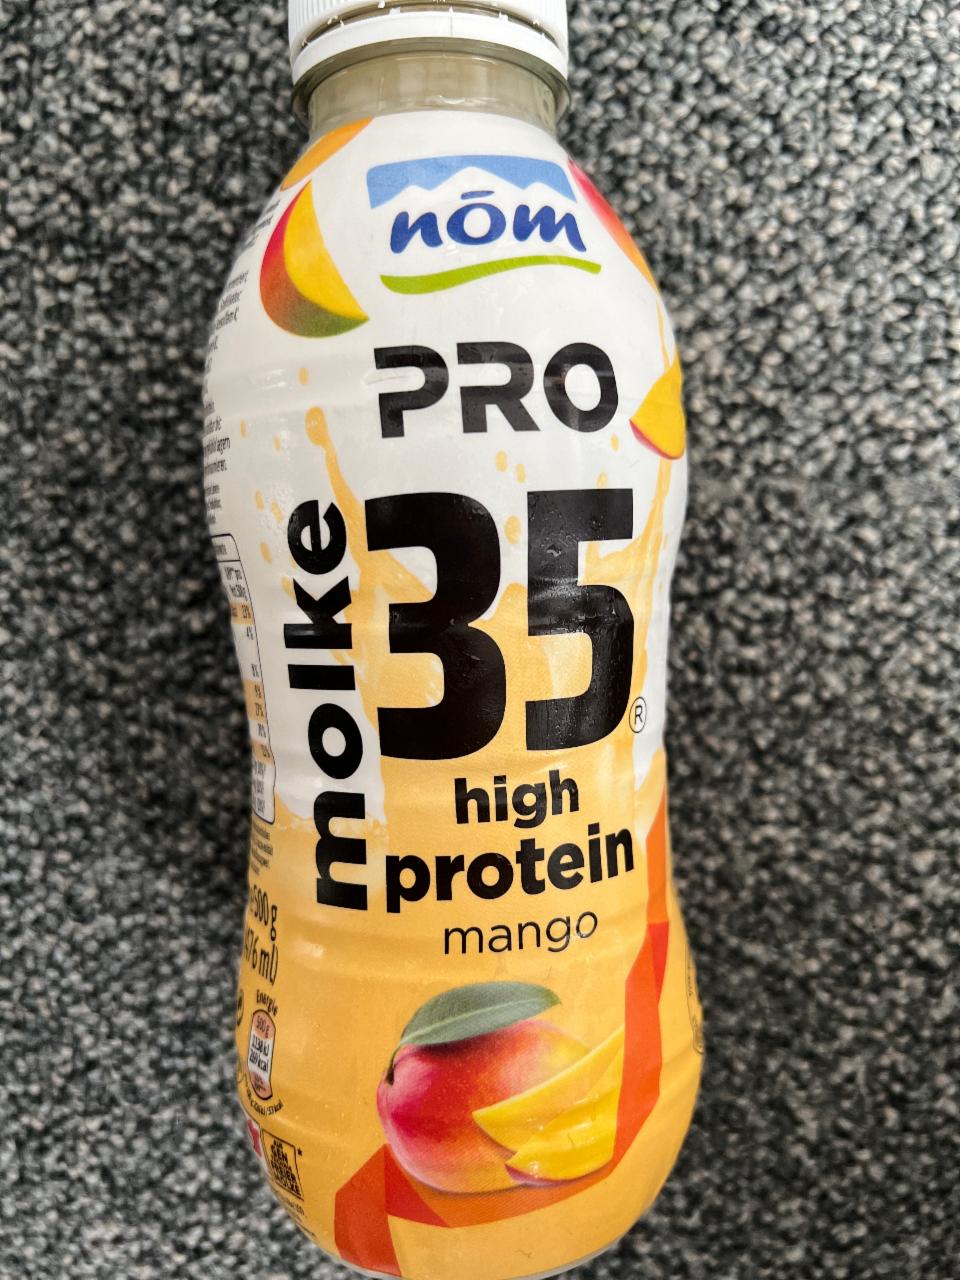 Fotografie - Pro 35 high protein mango molke Nóm